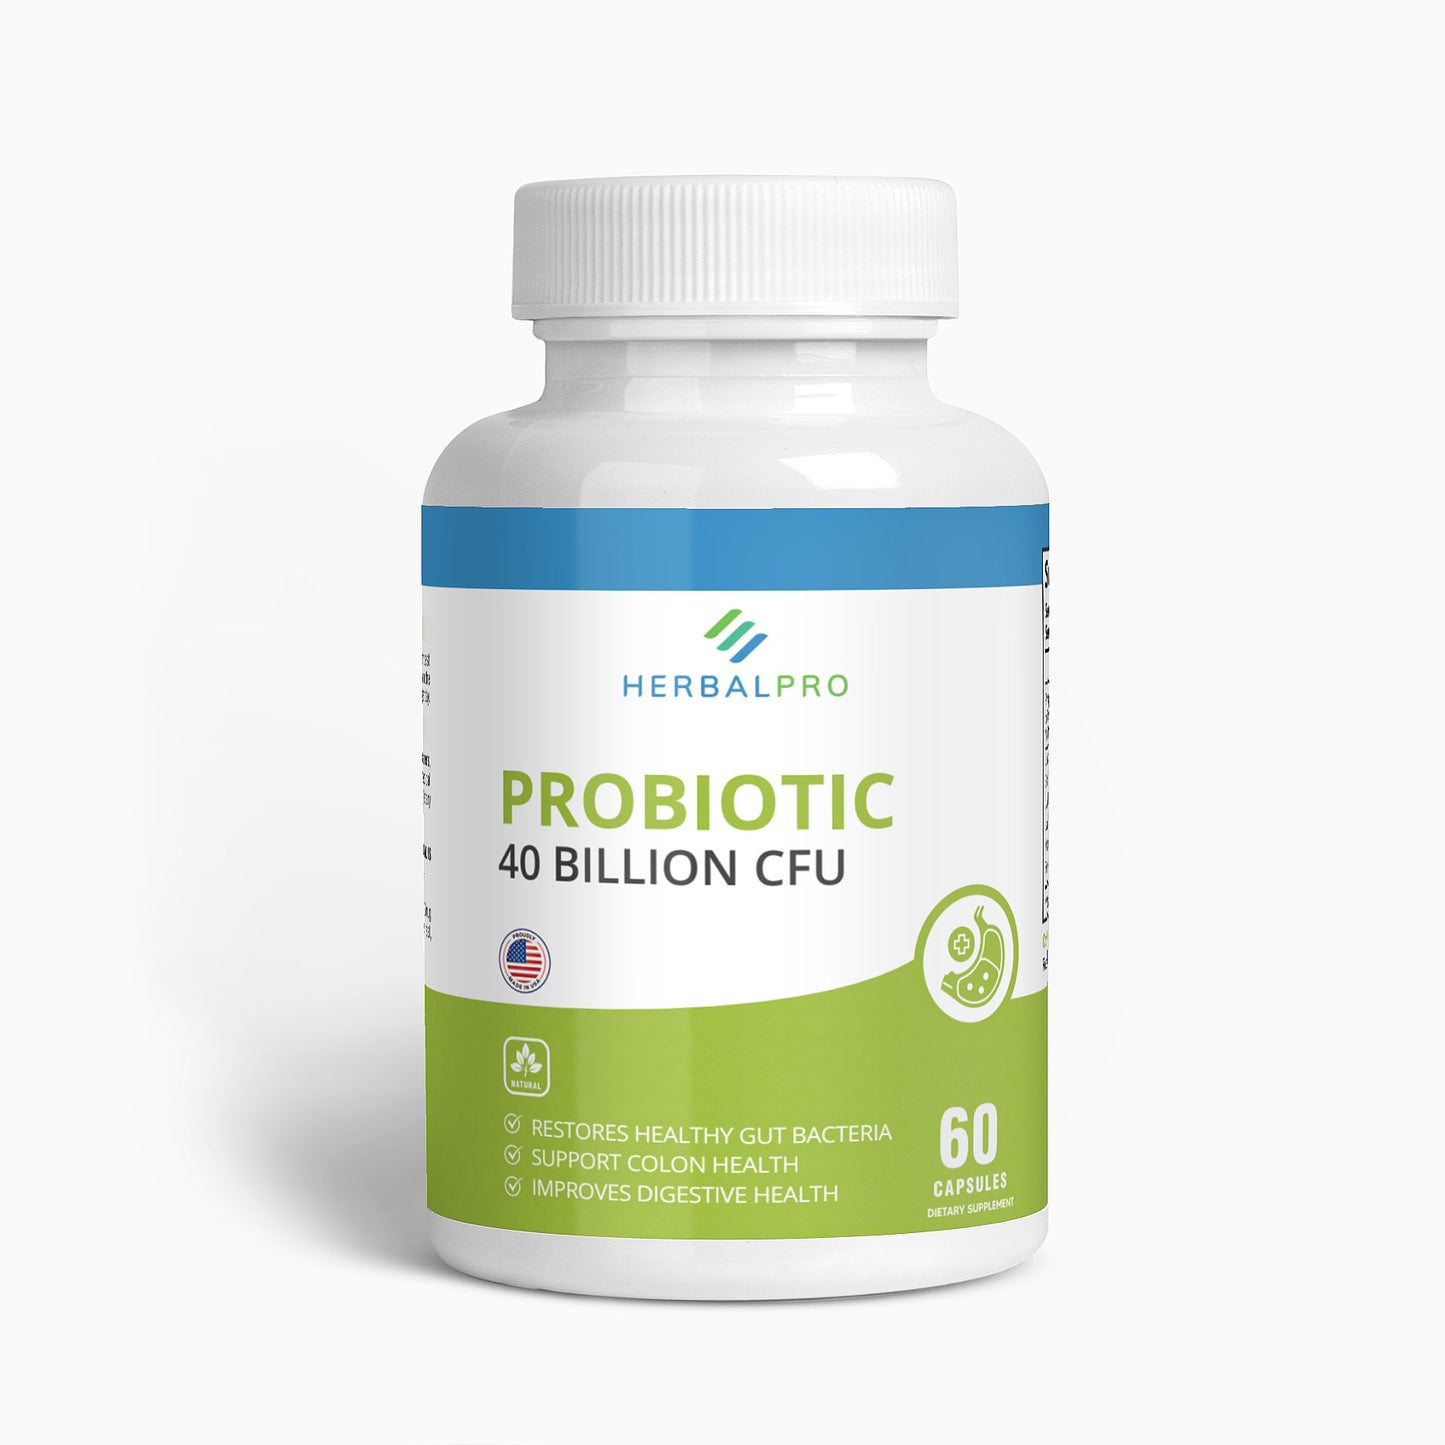 Probiotic (40 Billion CFU)